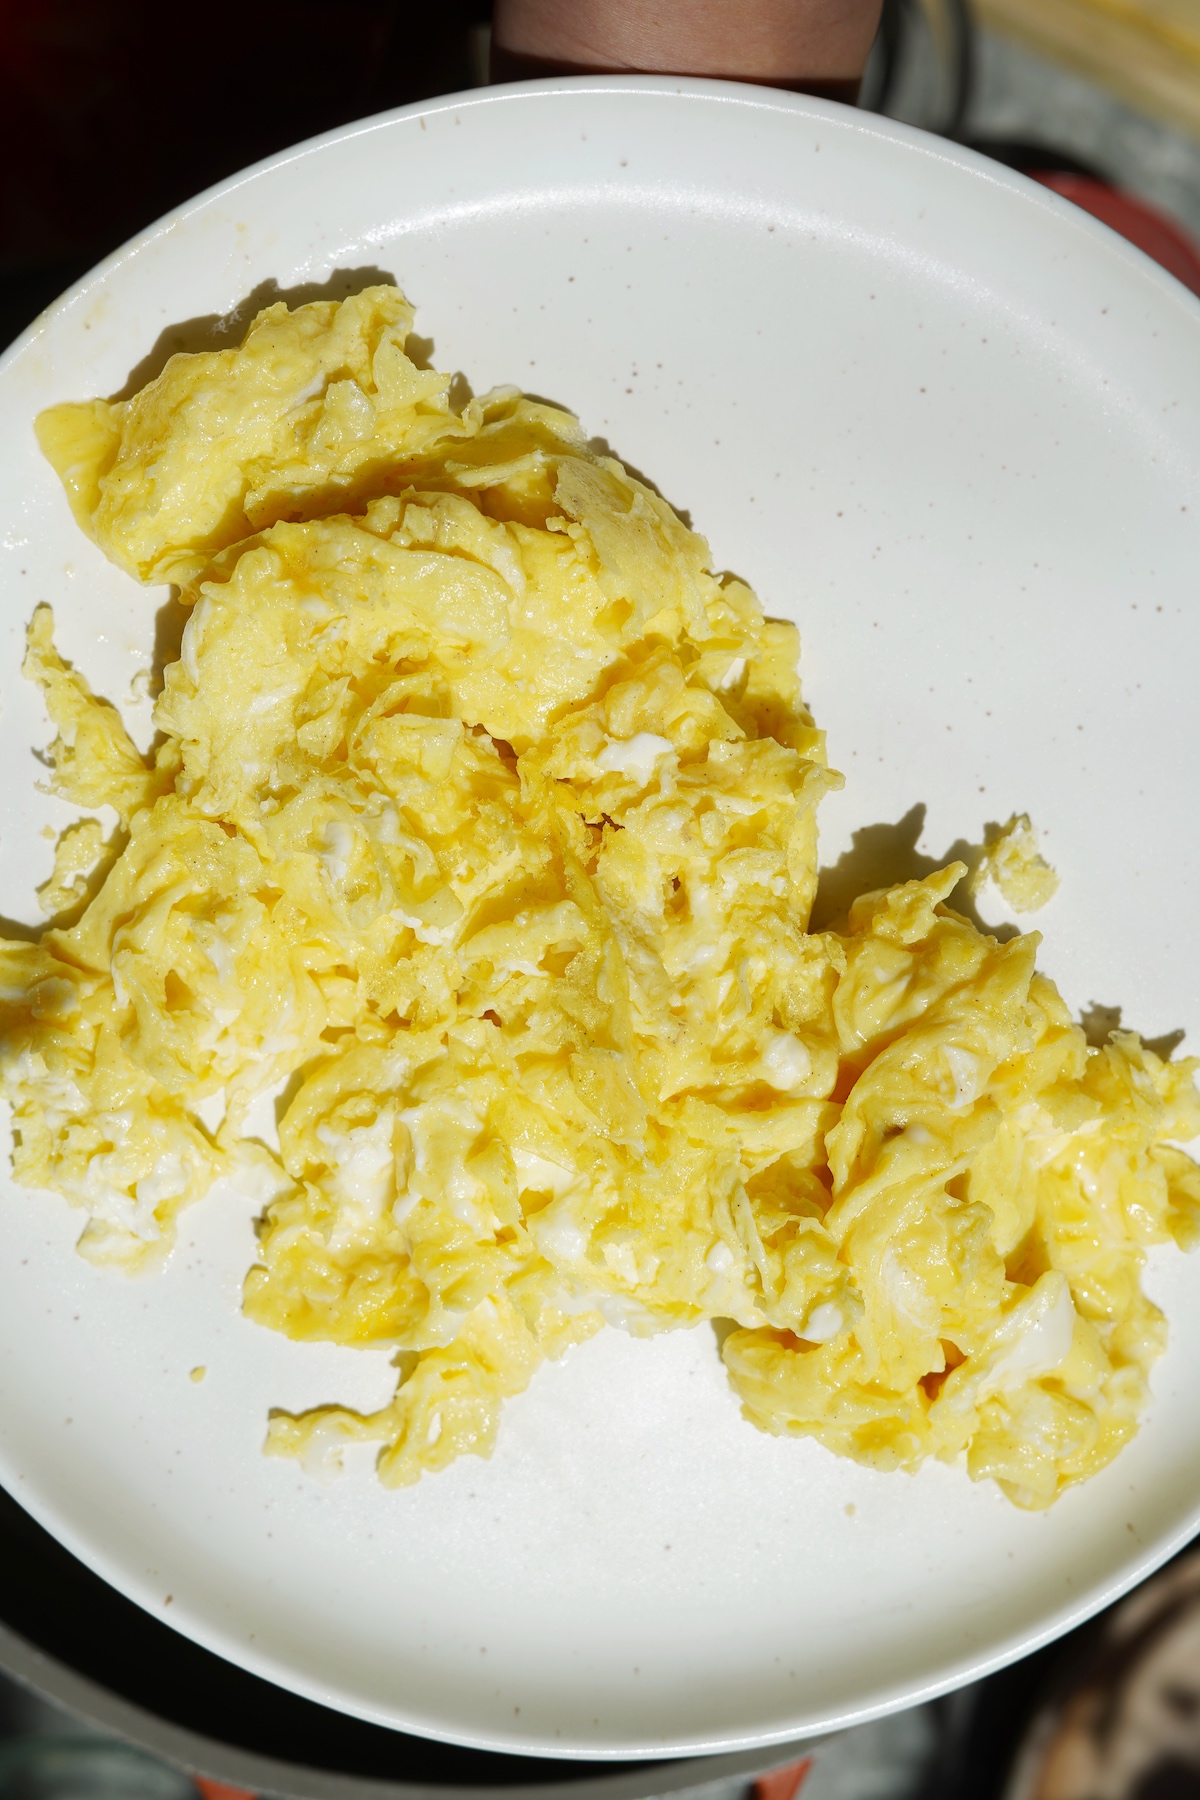 Plate of scrambled eggs.